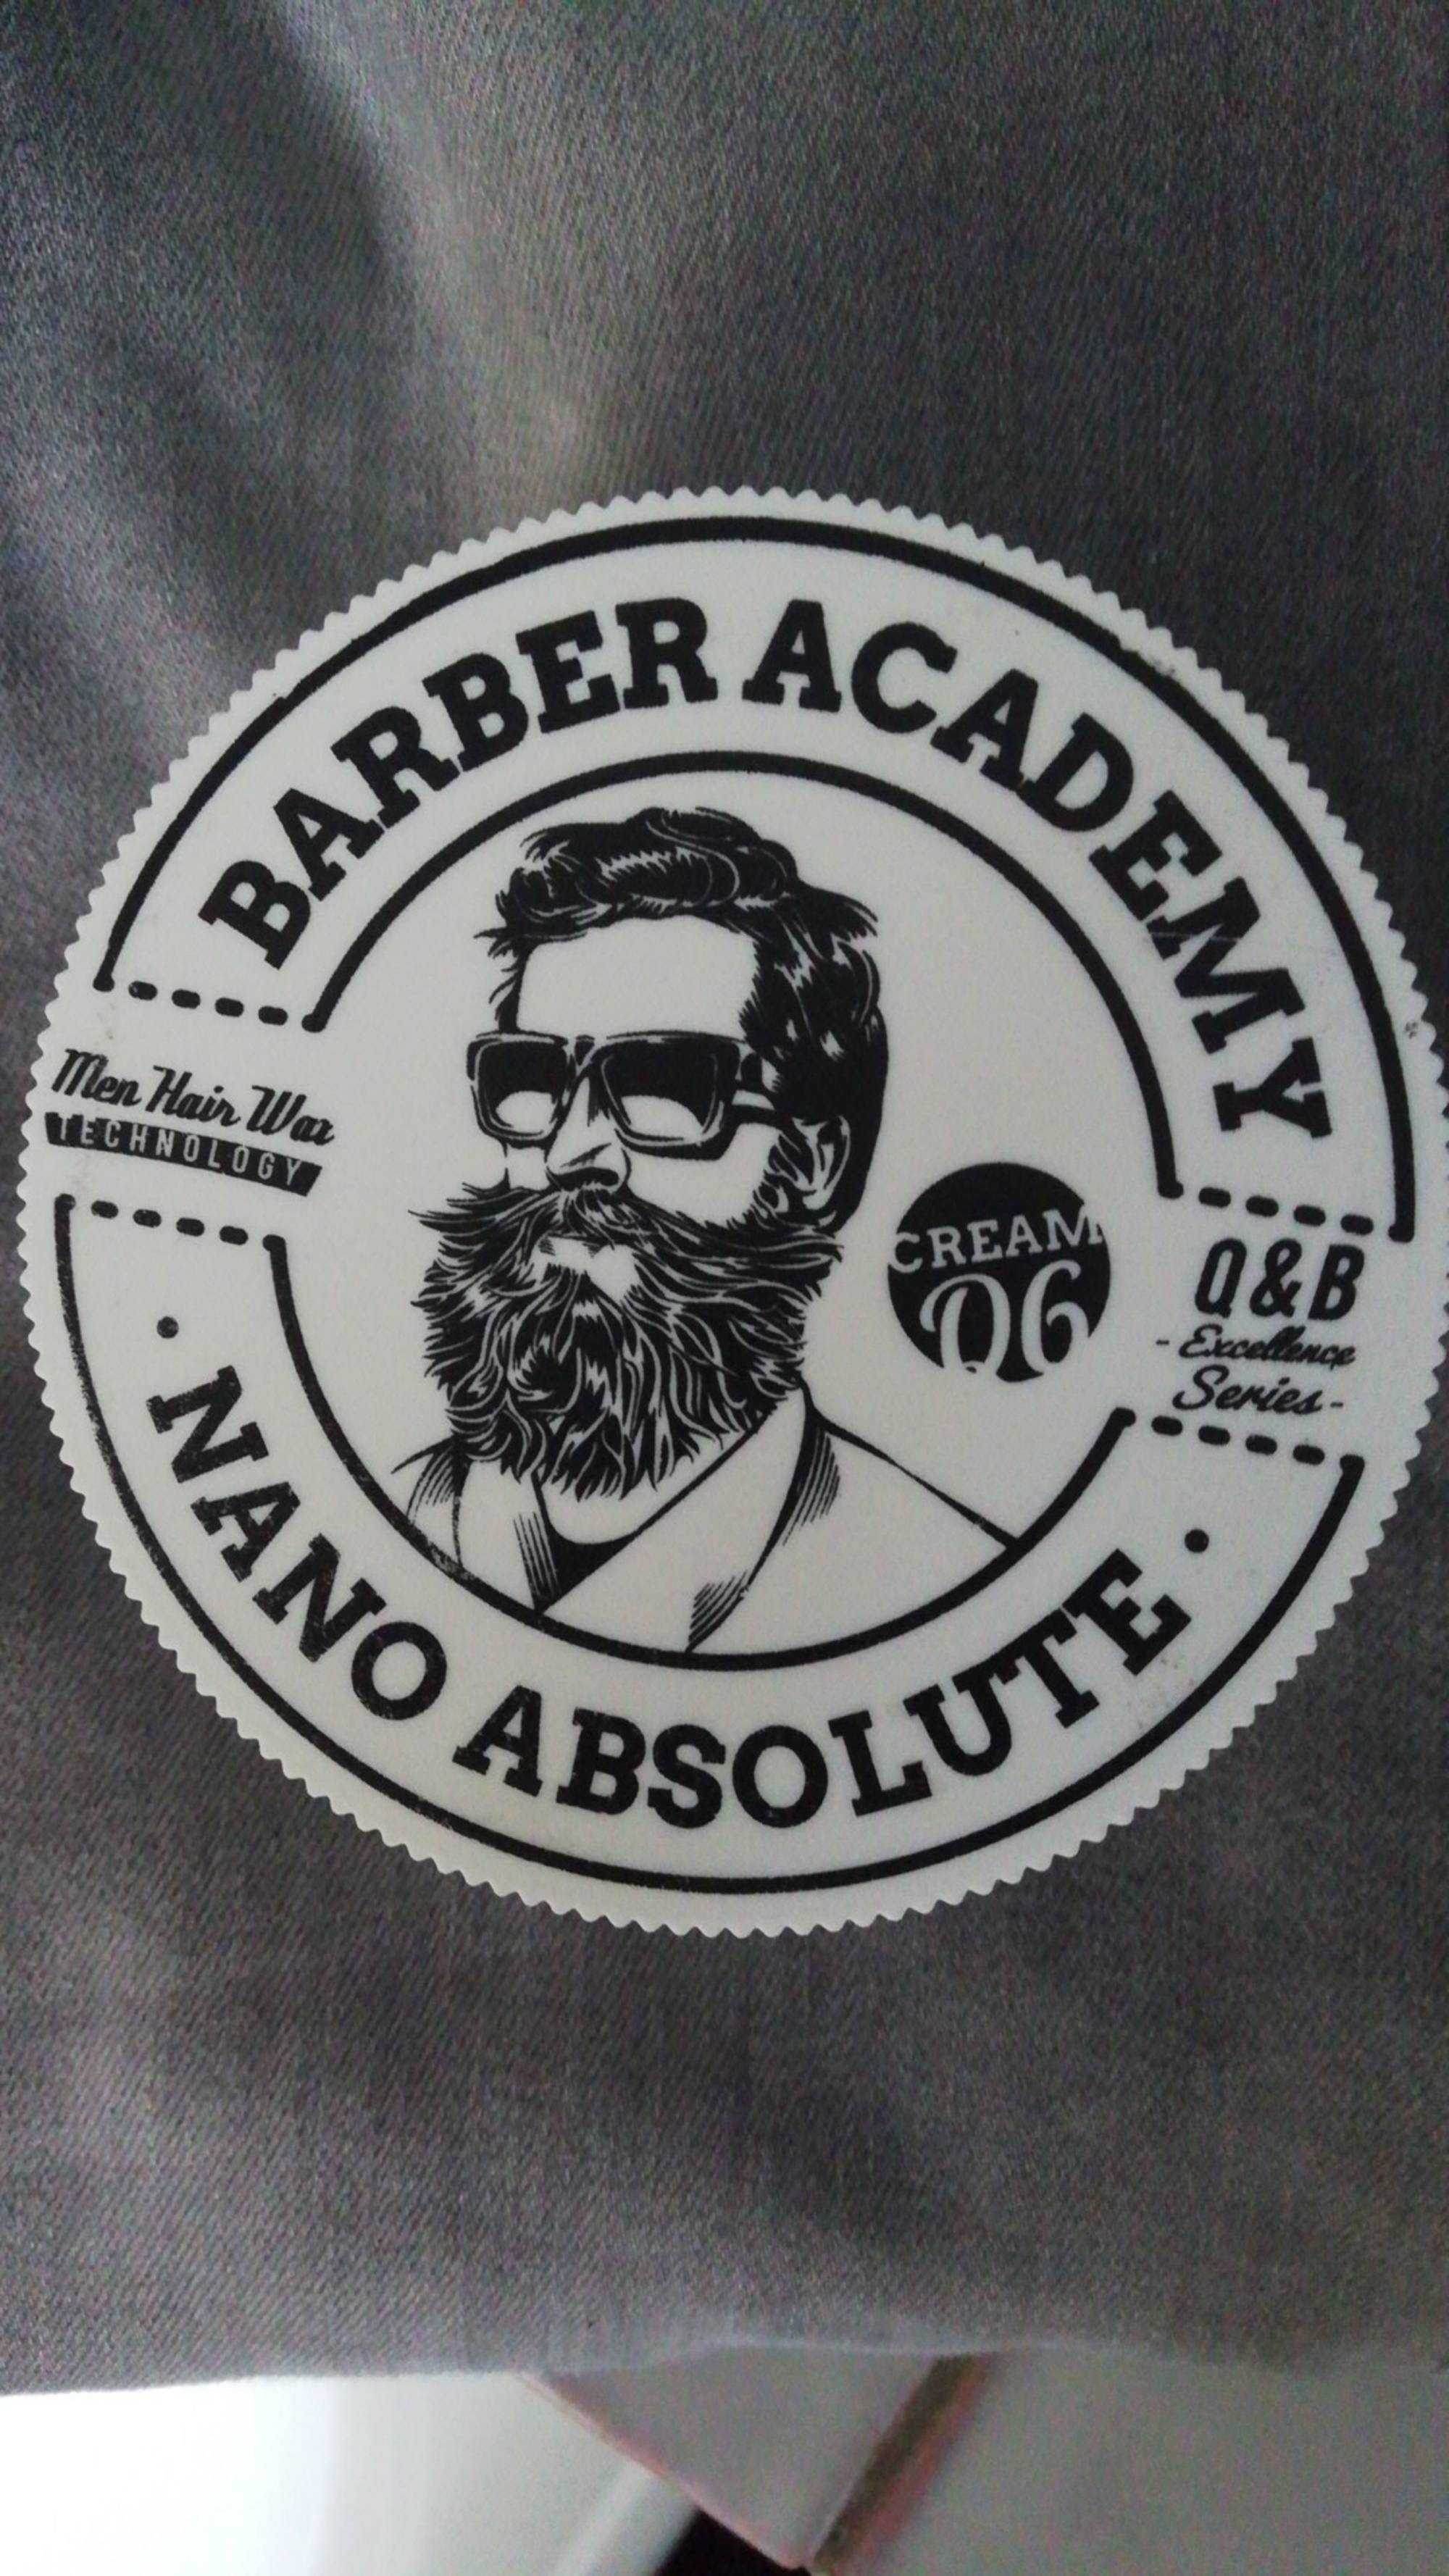 NANO ABSOLUTE - Barber academy 